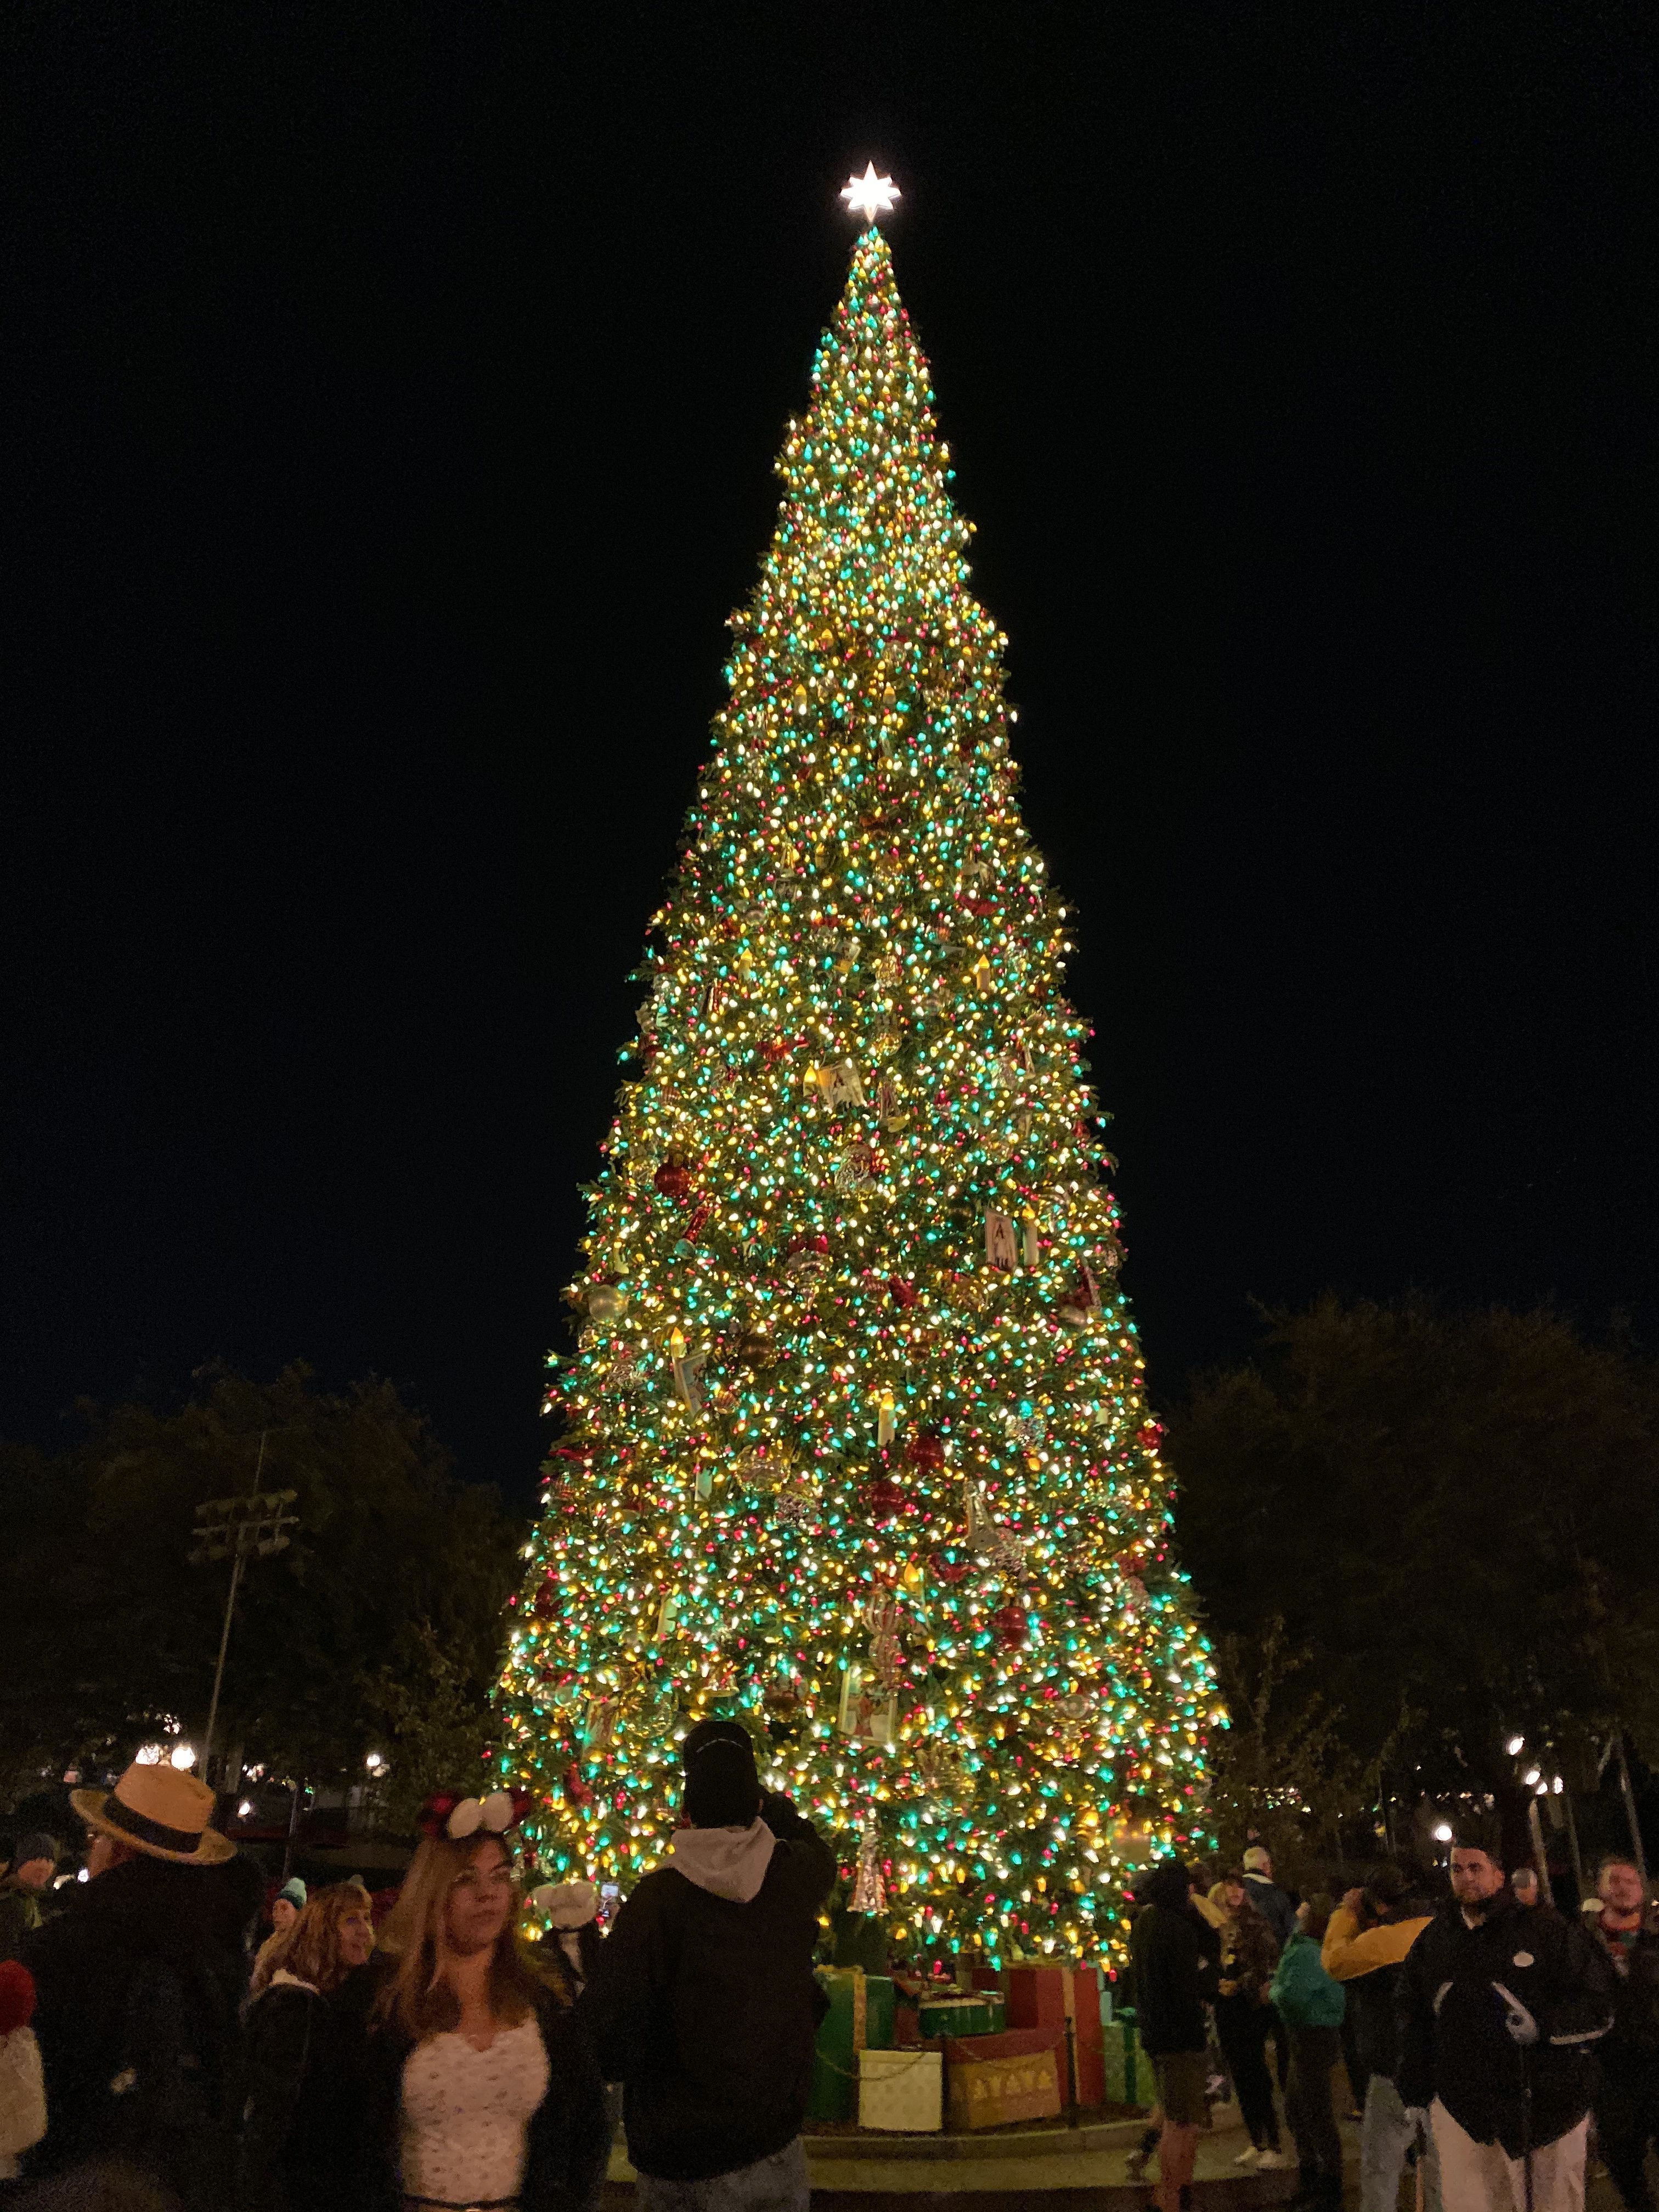 A lit up Christmas tree in Disneyland